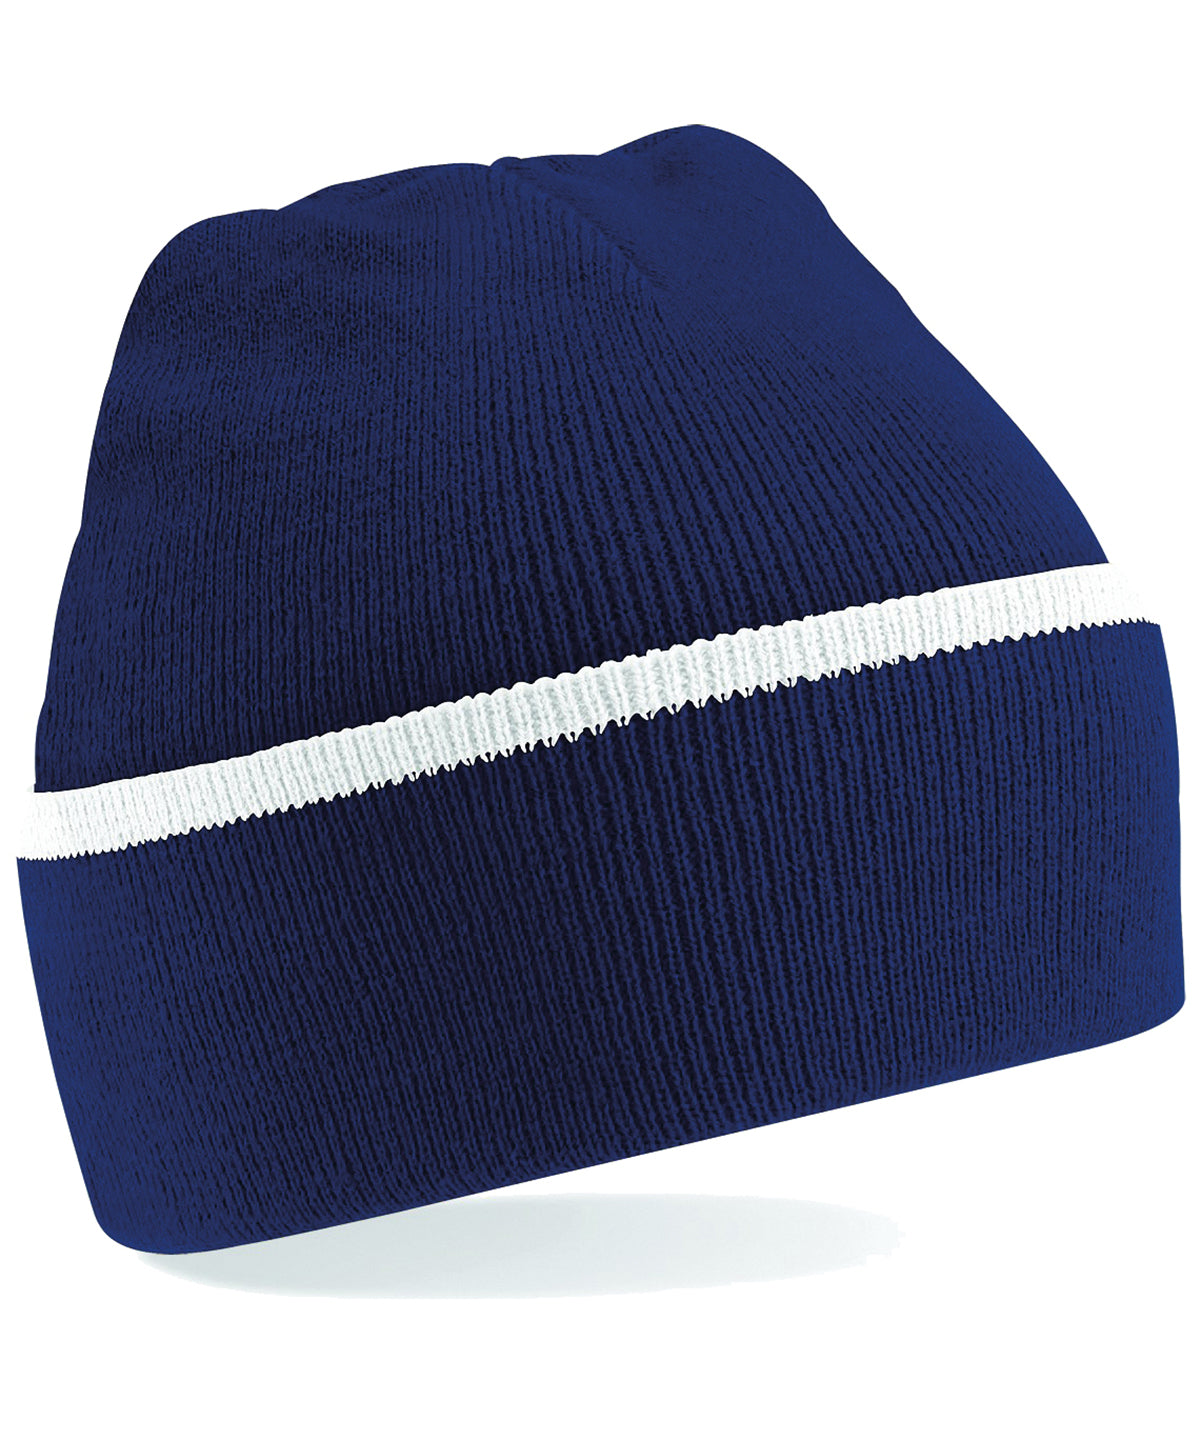 Personalised Hats - Navy Beechfield Teamwear beanie